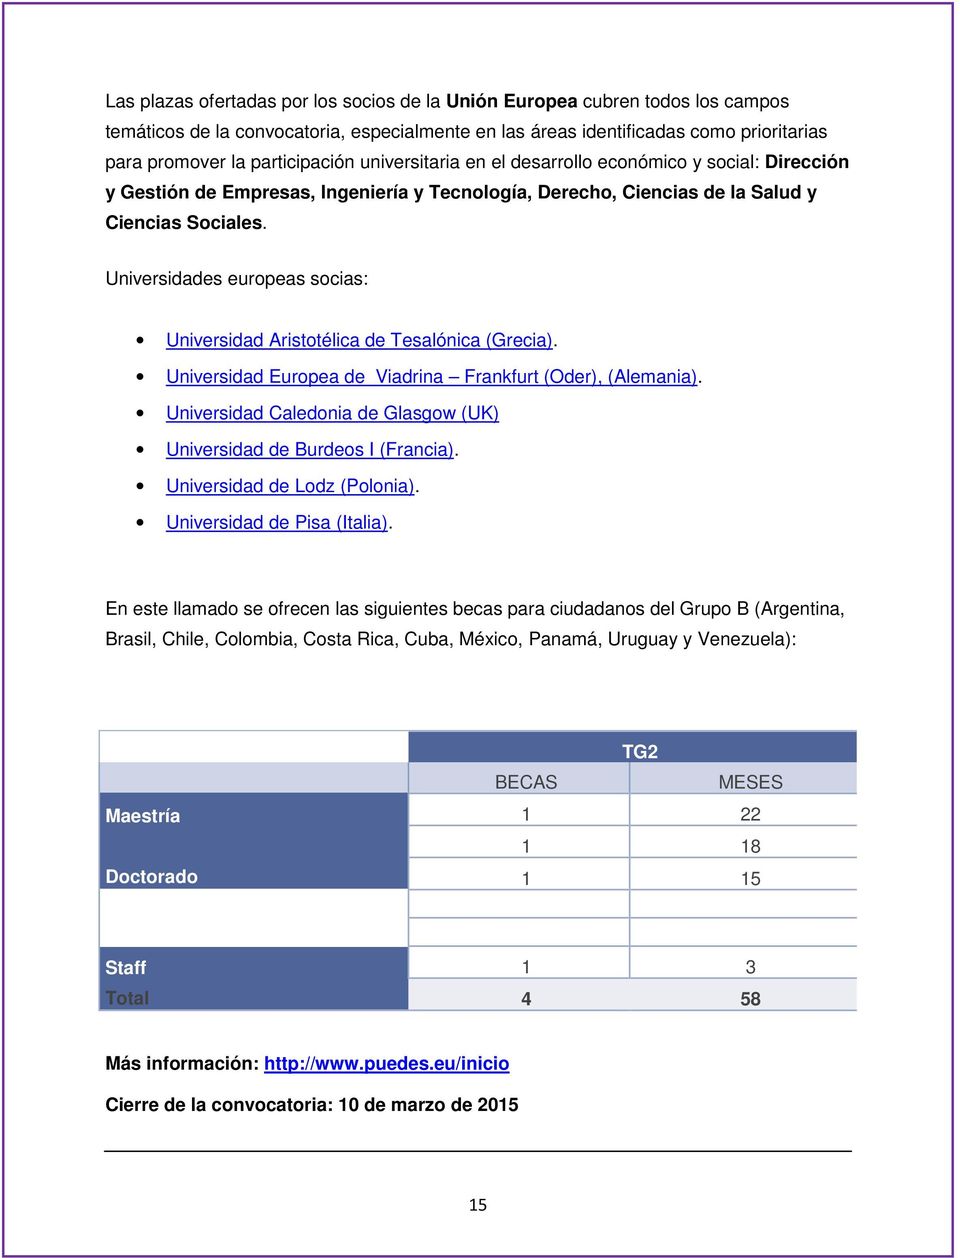 Universidades europeas socias: Universidad Aristotélica de Tesalónica (Grecia). Universidad Europea de Viadrina Frankfurt (Oder), (Alemania).